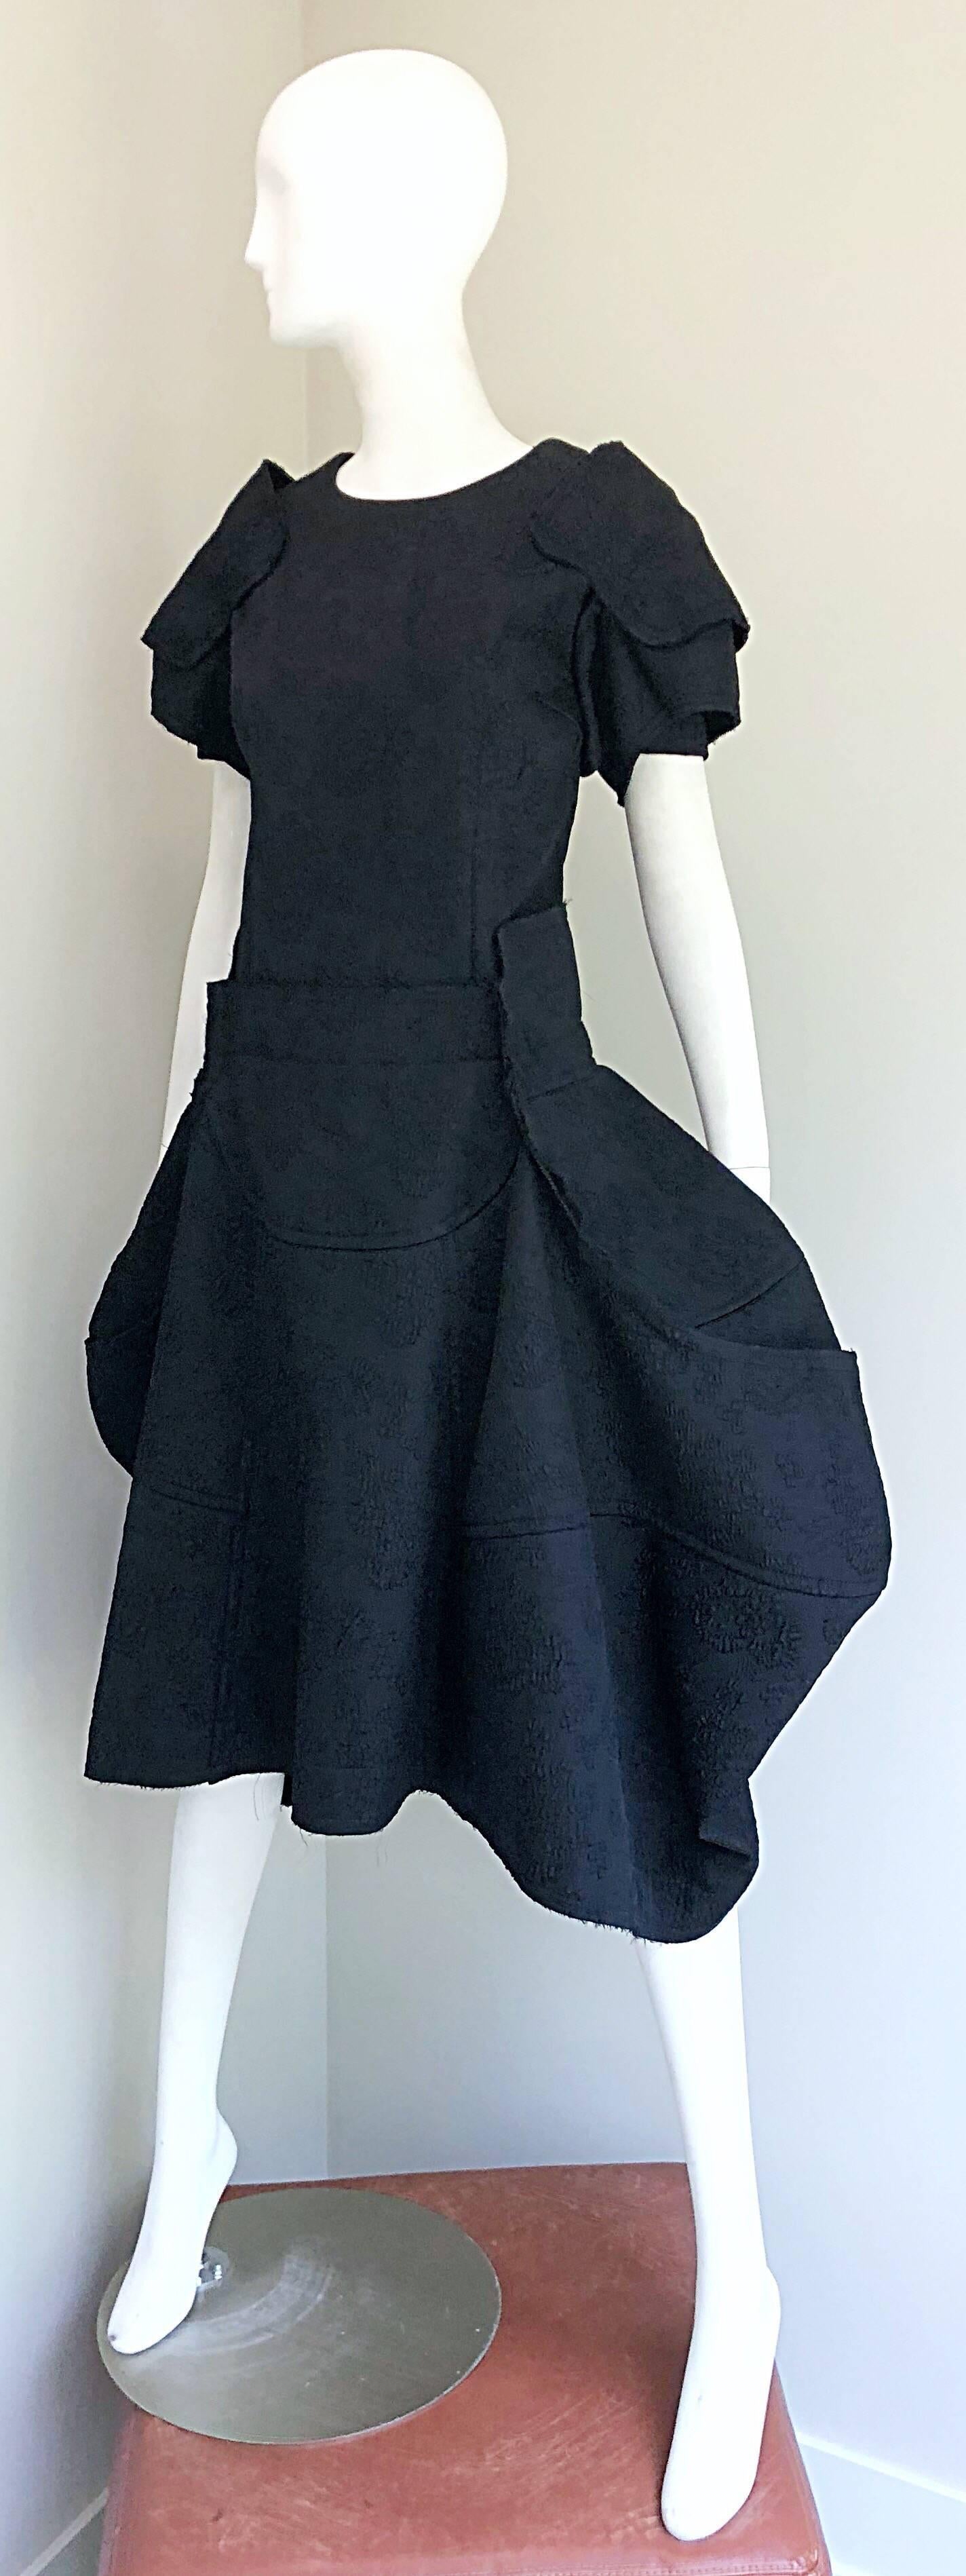 Comme Des Garcons Samurai 2016 Collection Black Avant Garde Collectible Dress 4